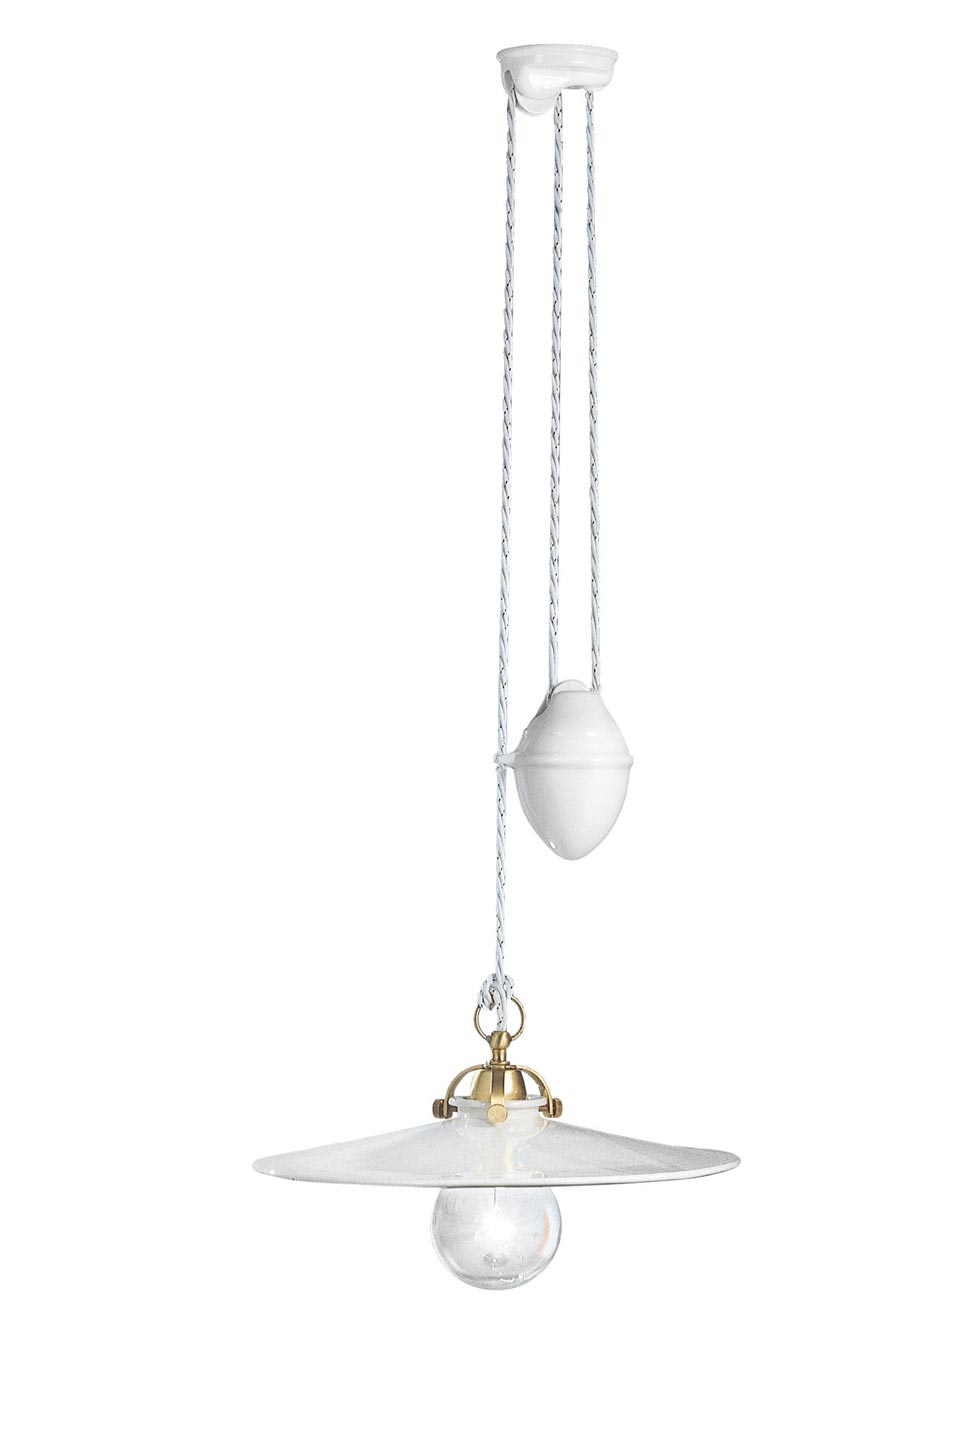 Asti rising and falling pendant in white ceramic 31cm. Ferroluce Classic. 